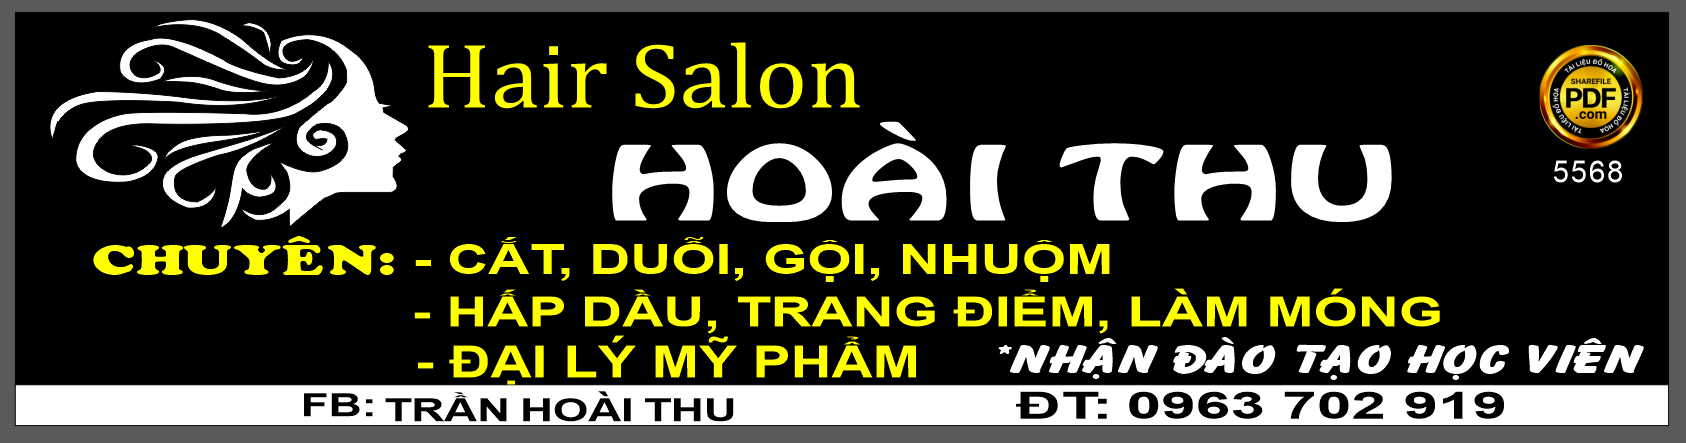 hair salon hoai thu - chuyen cat toc trang diem my pham.png